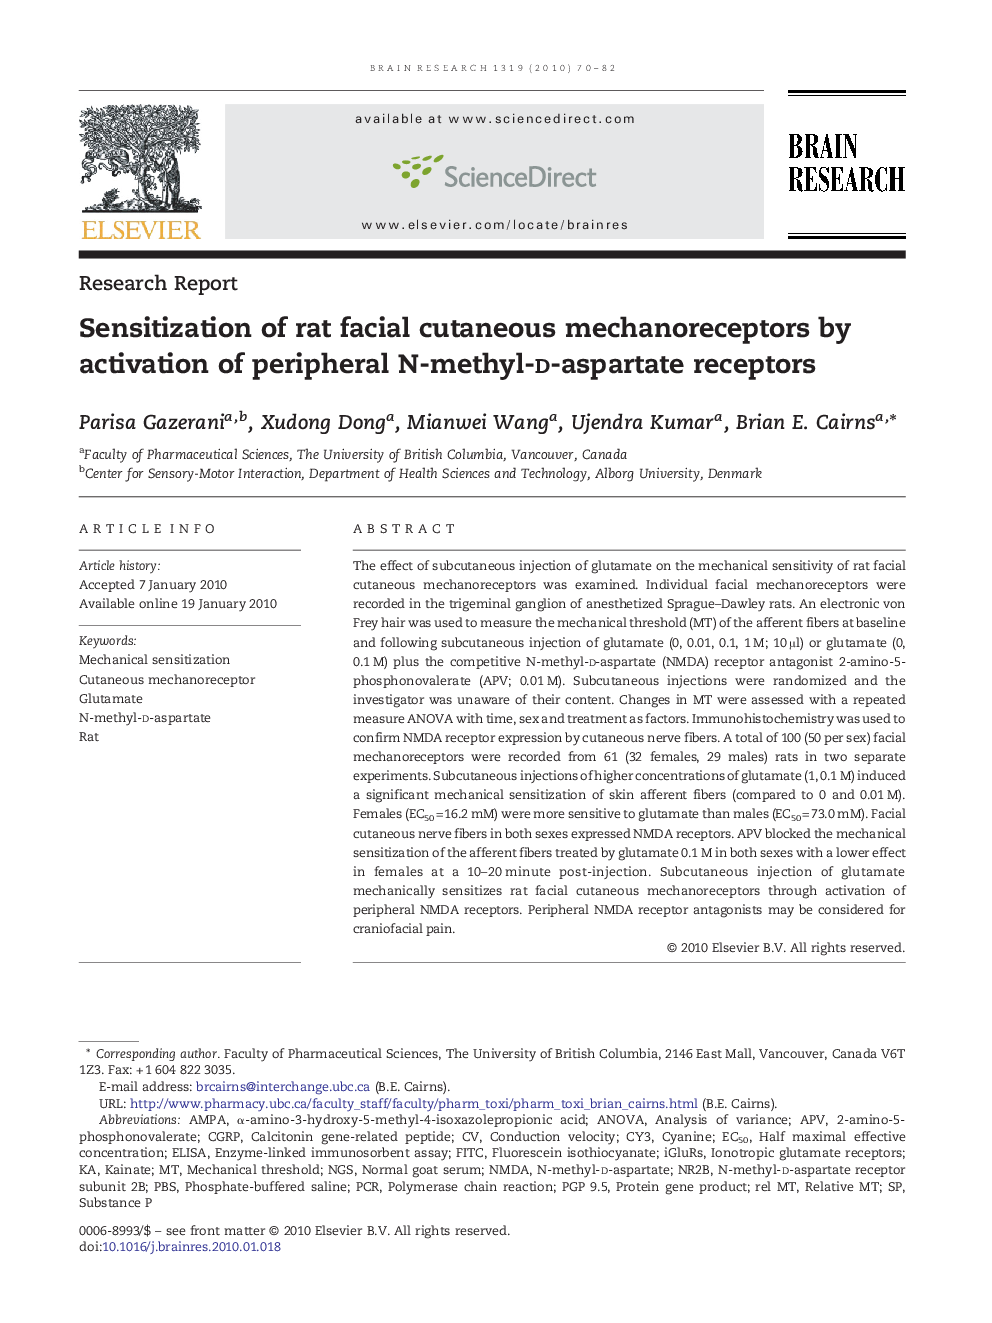 Sensitization of rat facial cutaneous mechanoreceptors by activation of peripheral N-methyl-d-aspartate receptors